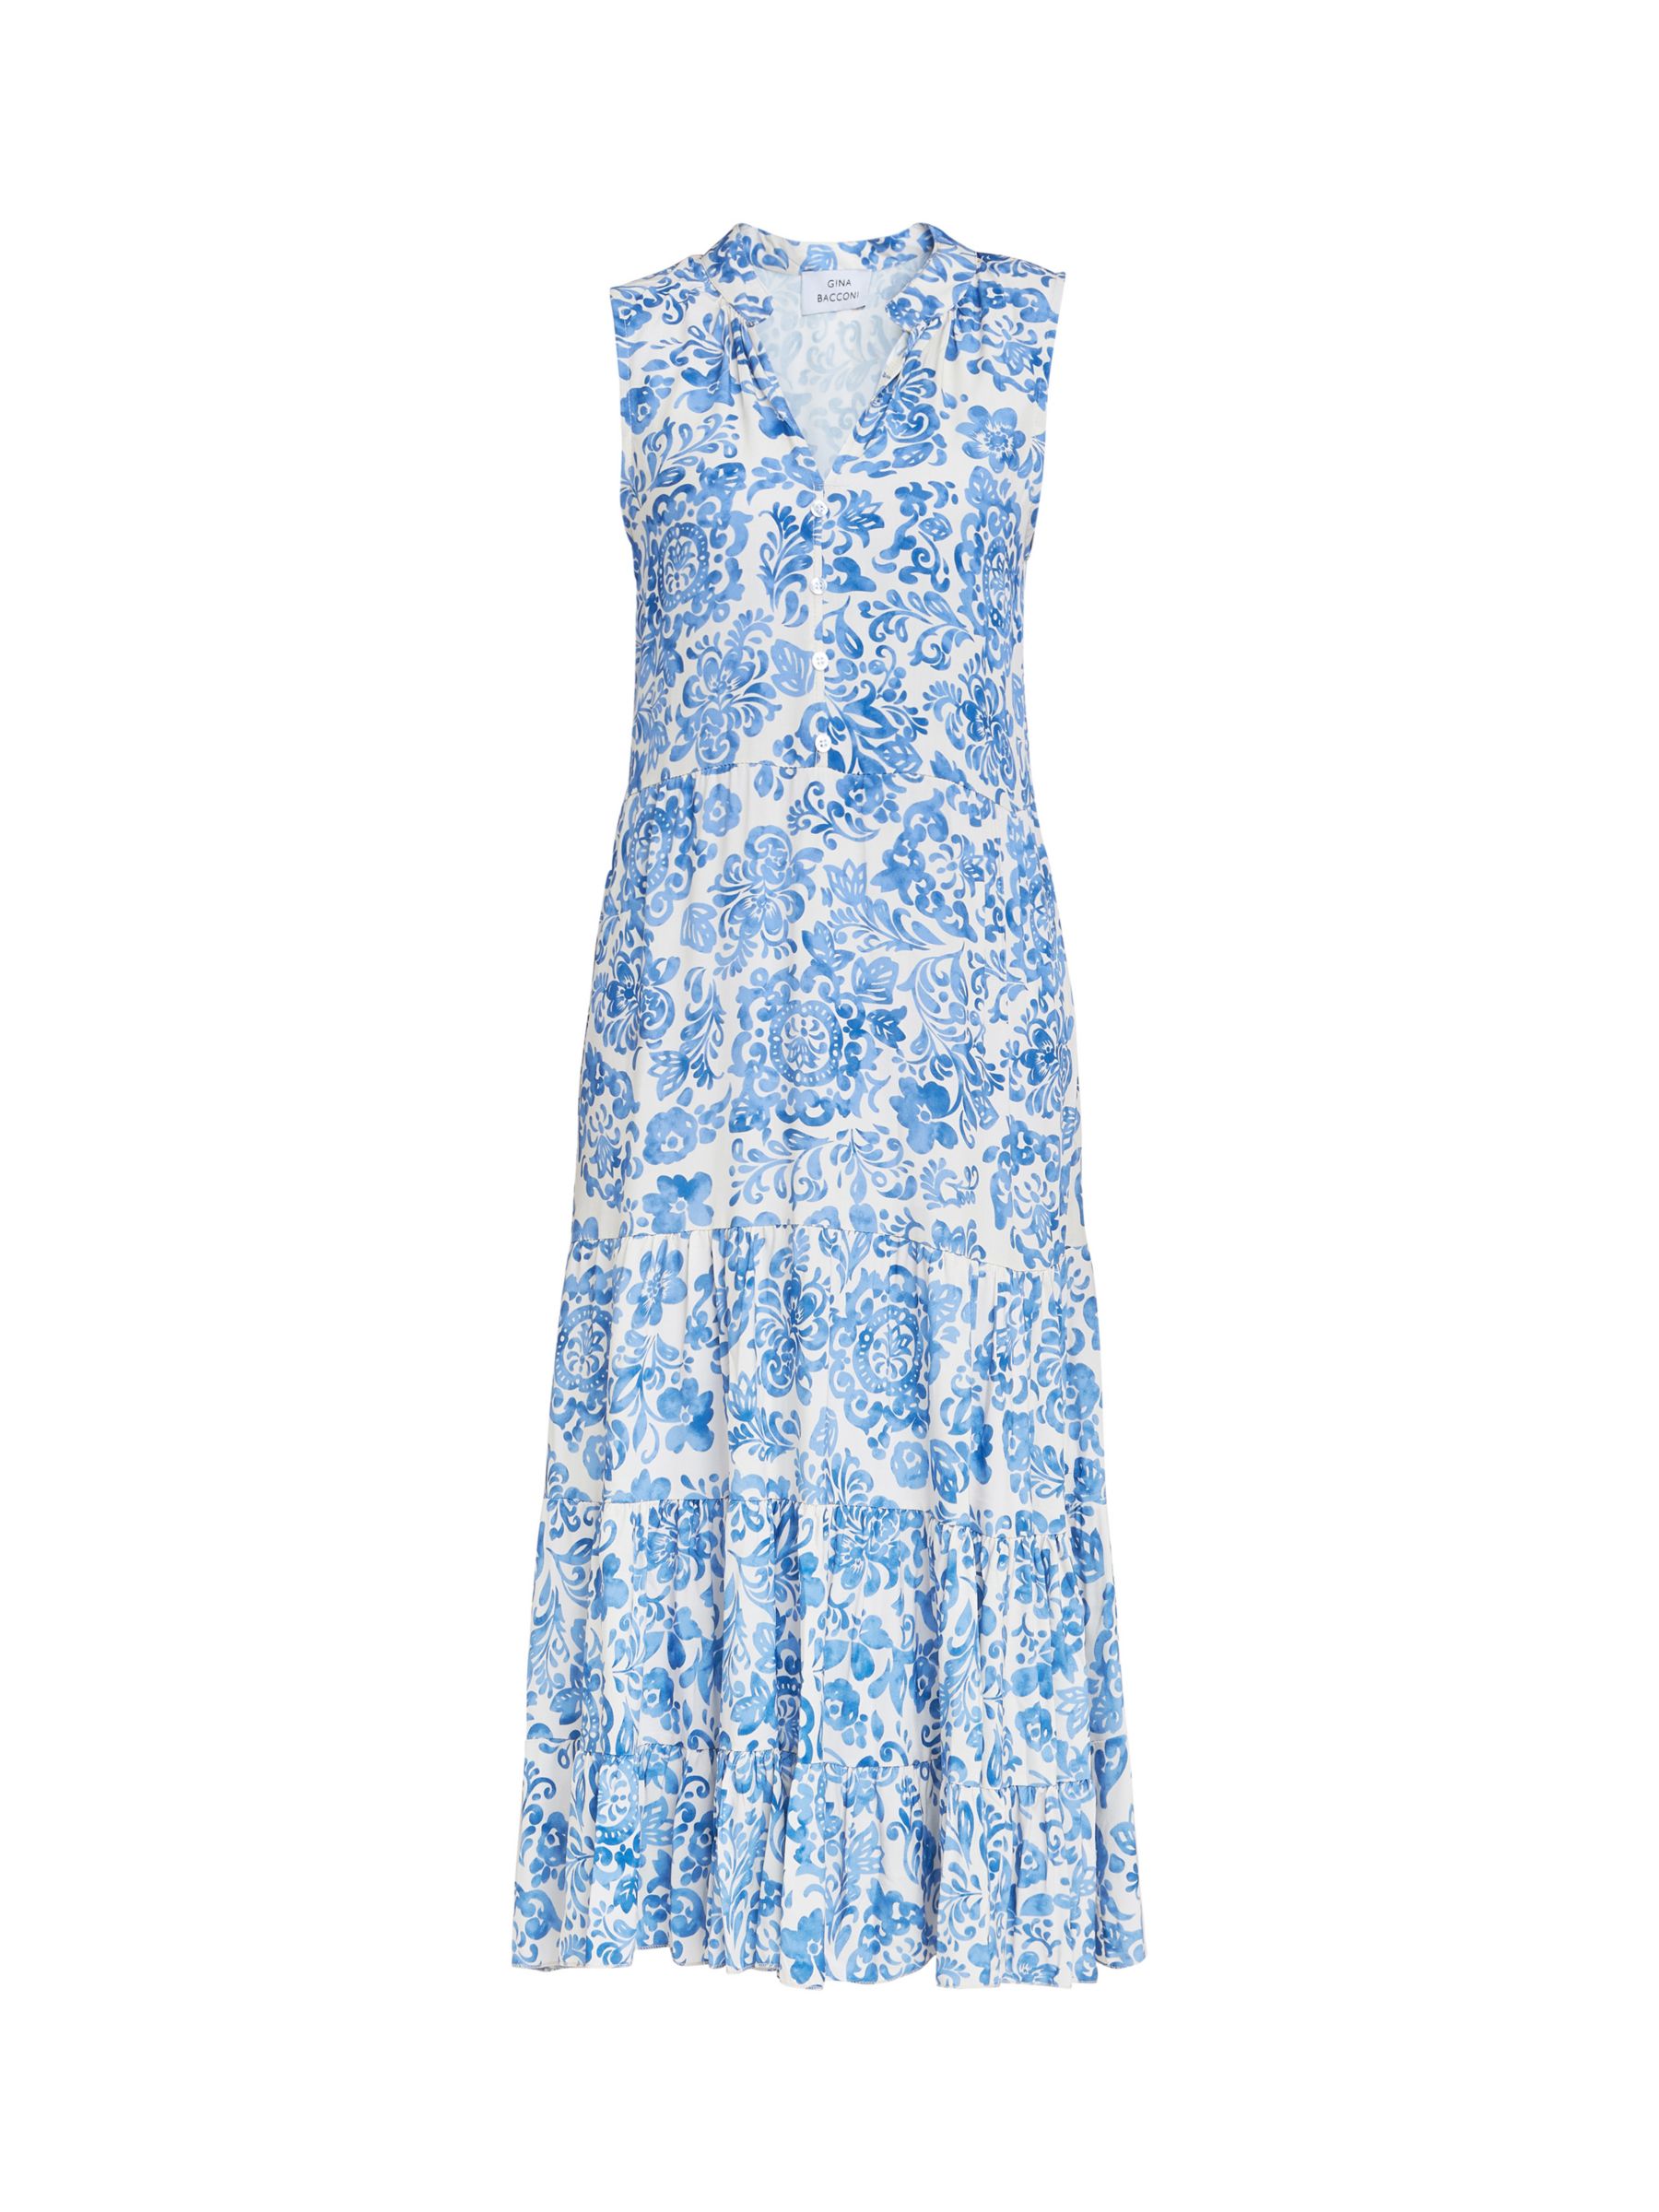 Gina Bacconi Lolita Floral Print Sleeveless Midi Dress, Blue/White, S